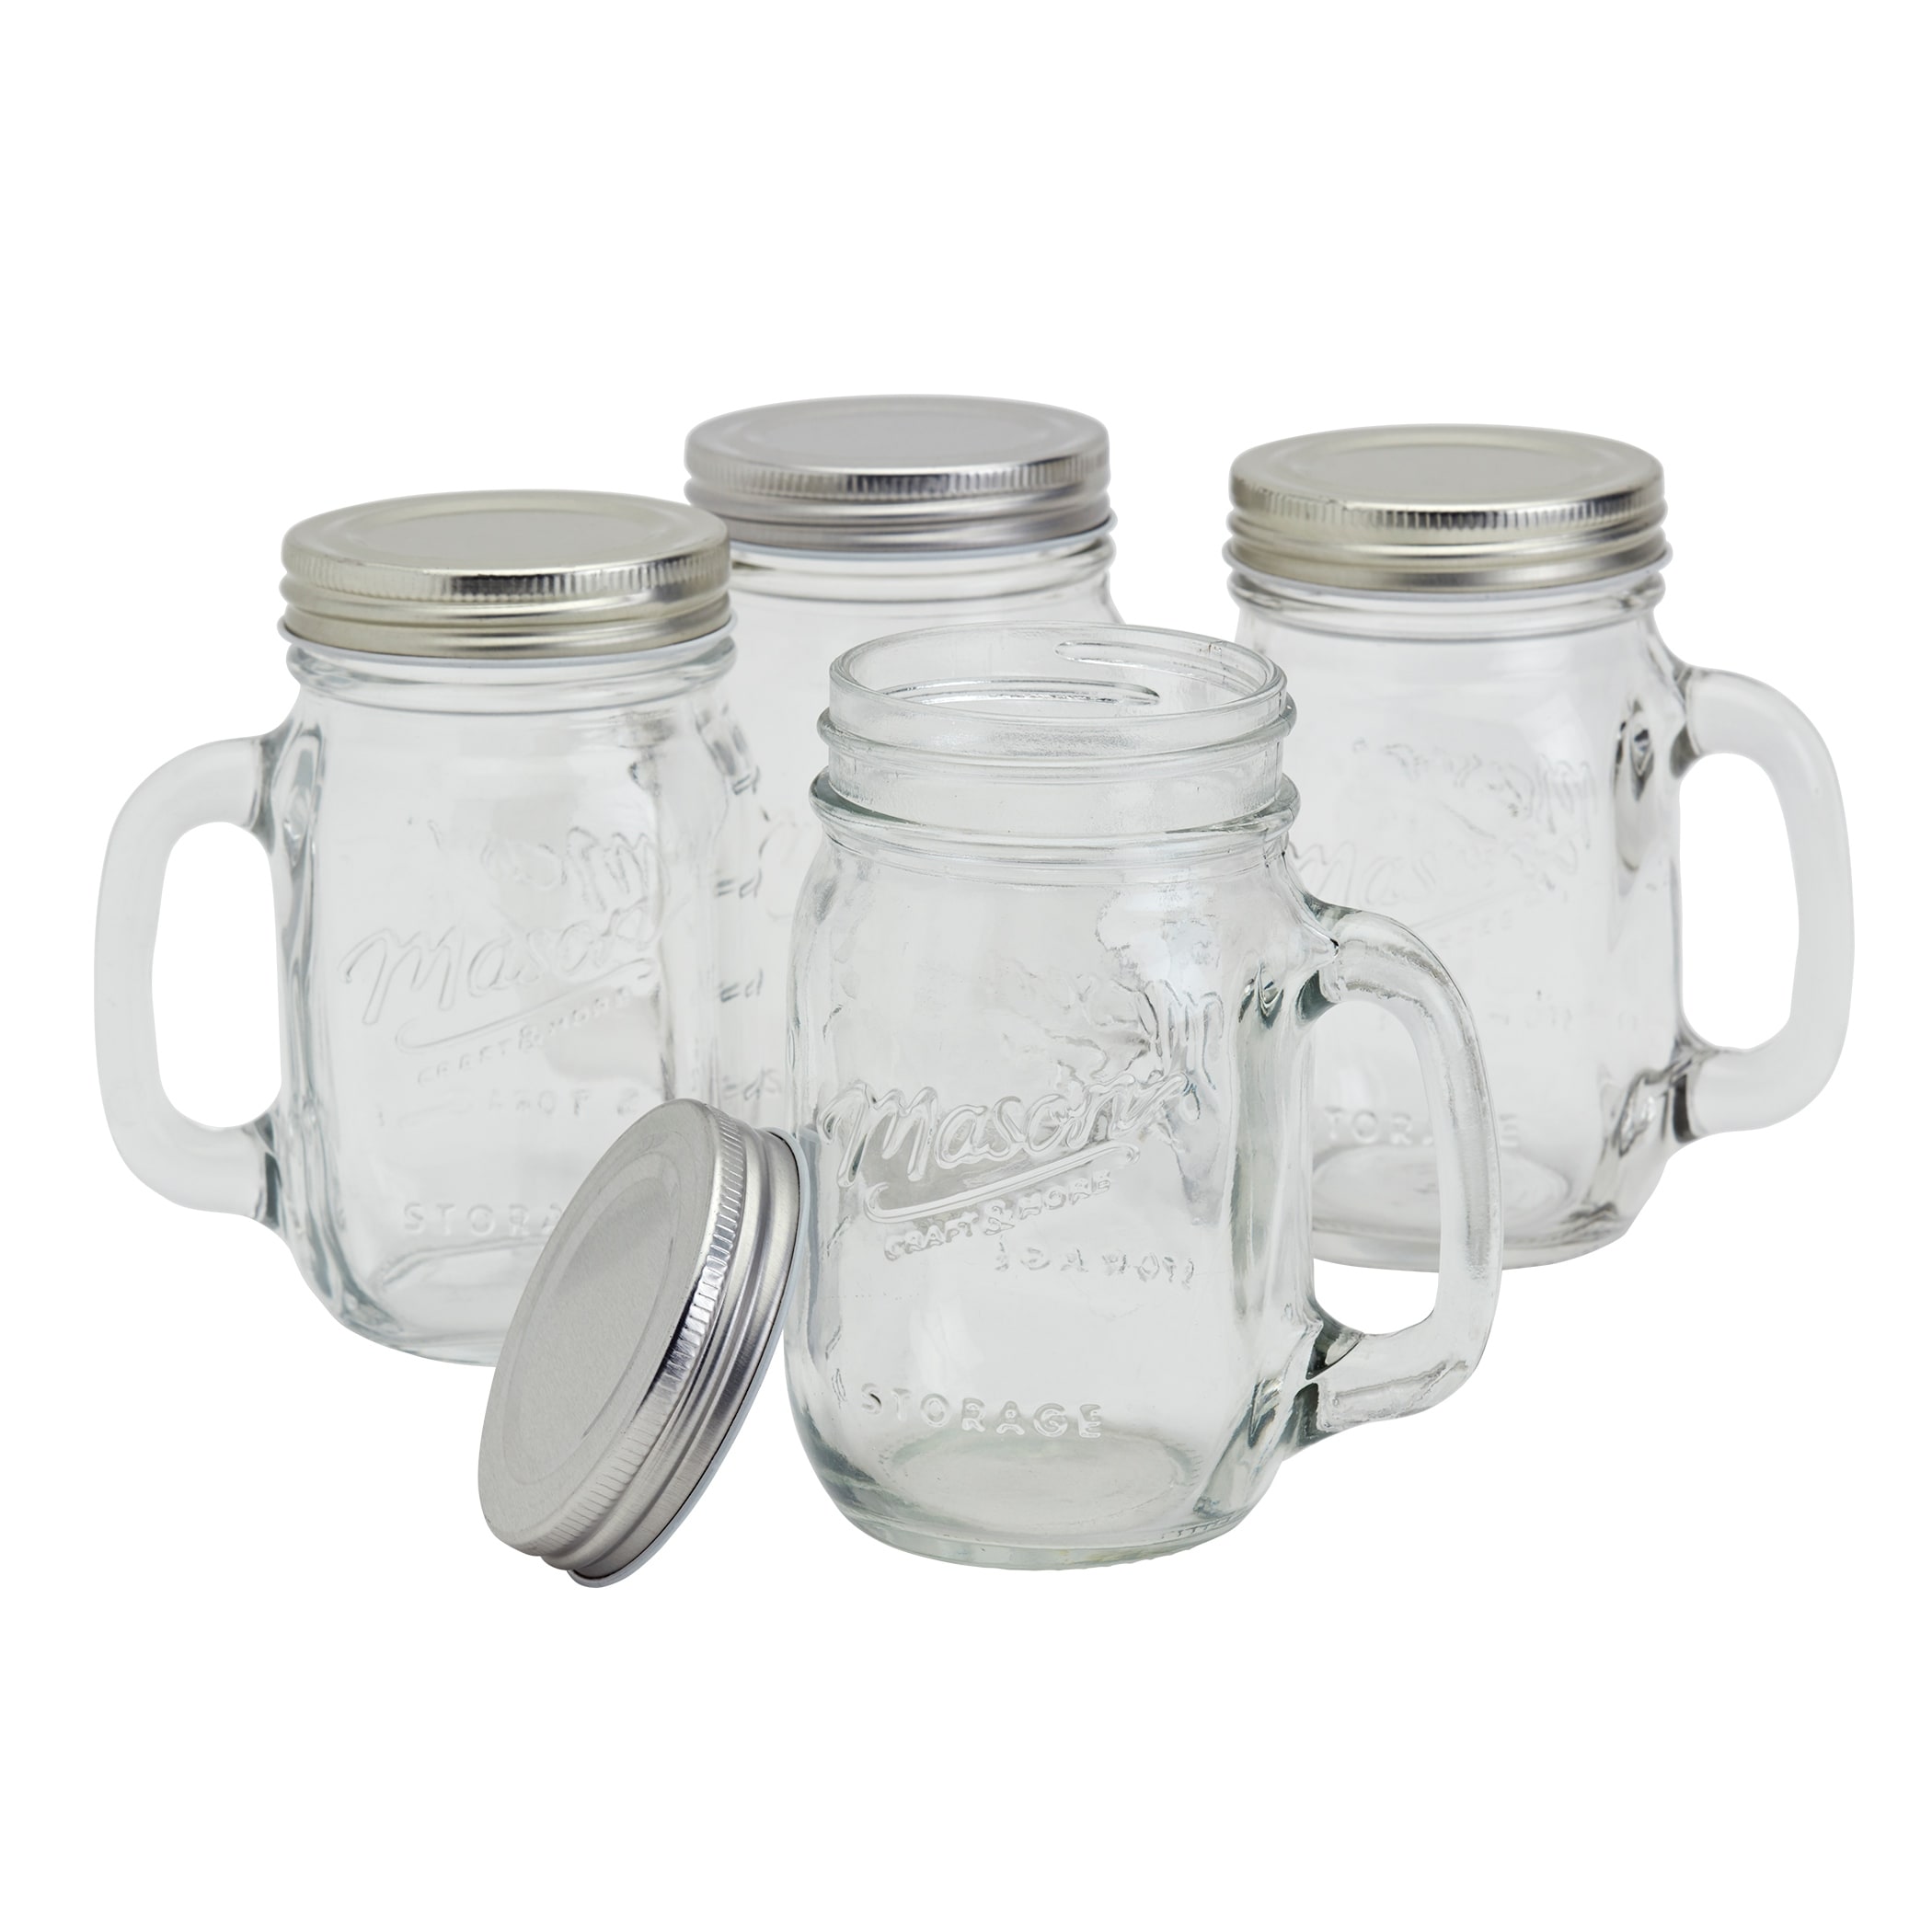 Mason Jar Cups, Mason Jars With Handle And Lids, Mason Jar